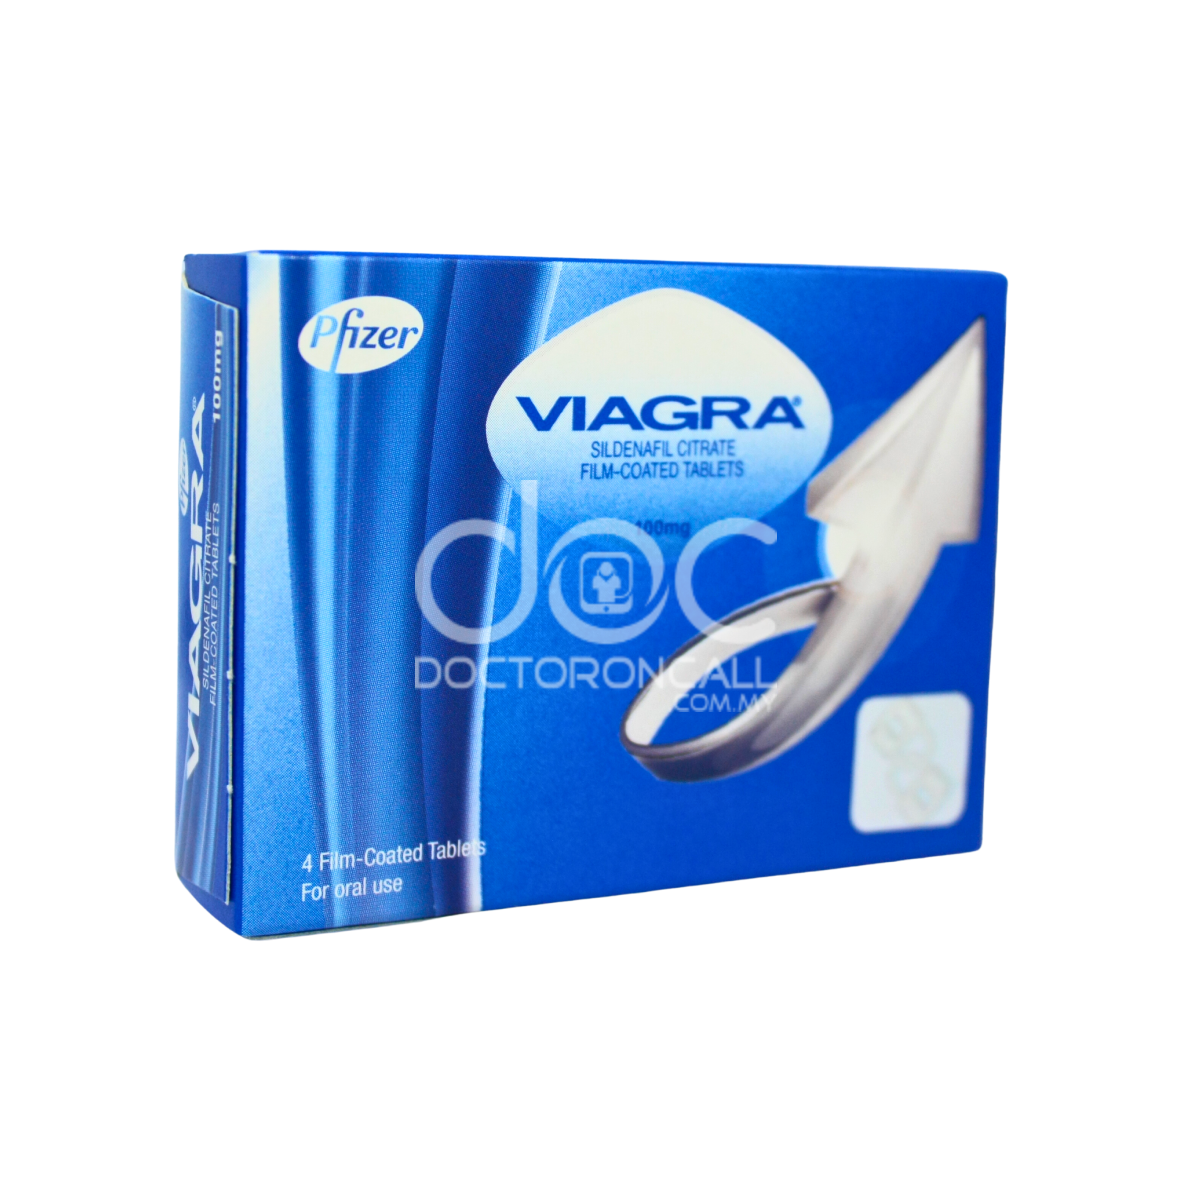 Viagra 100mg Tablet - 4s - DoctorOnCall Farmasi Online